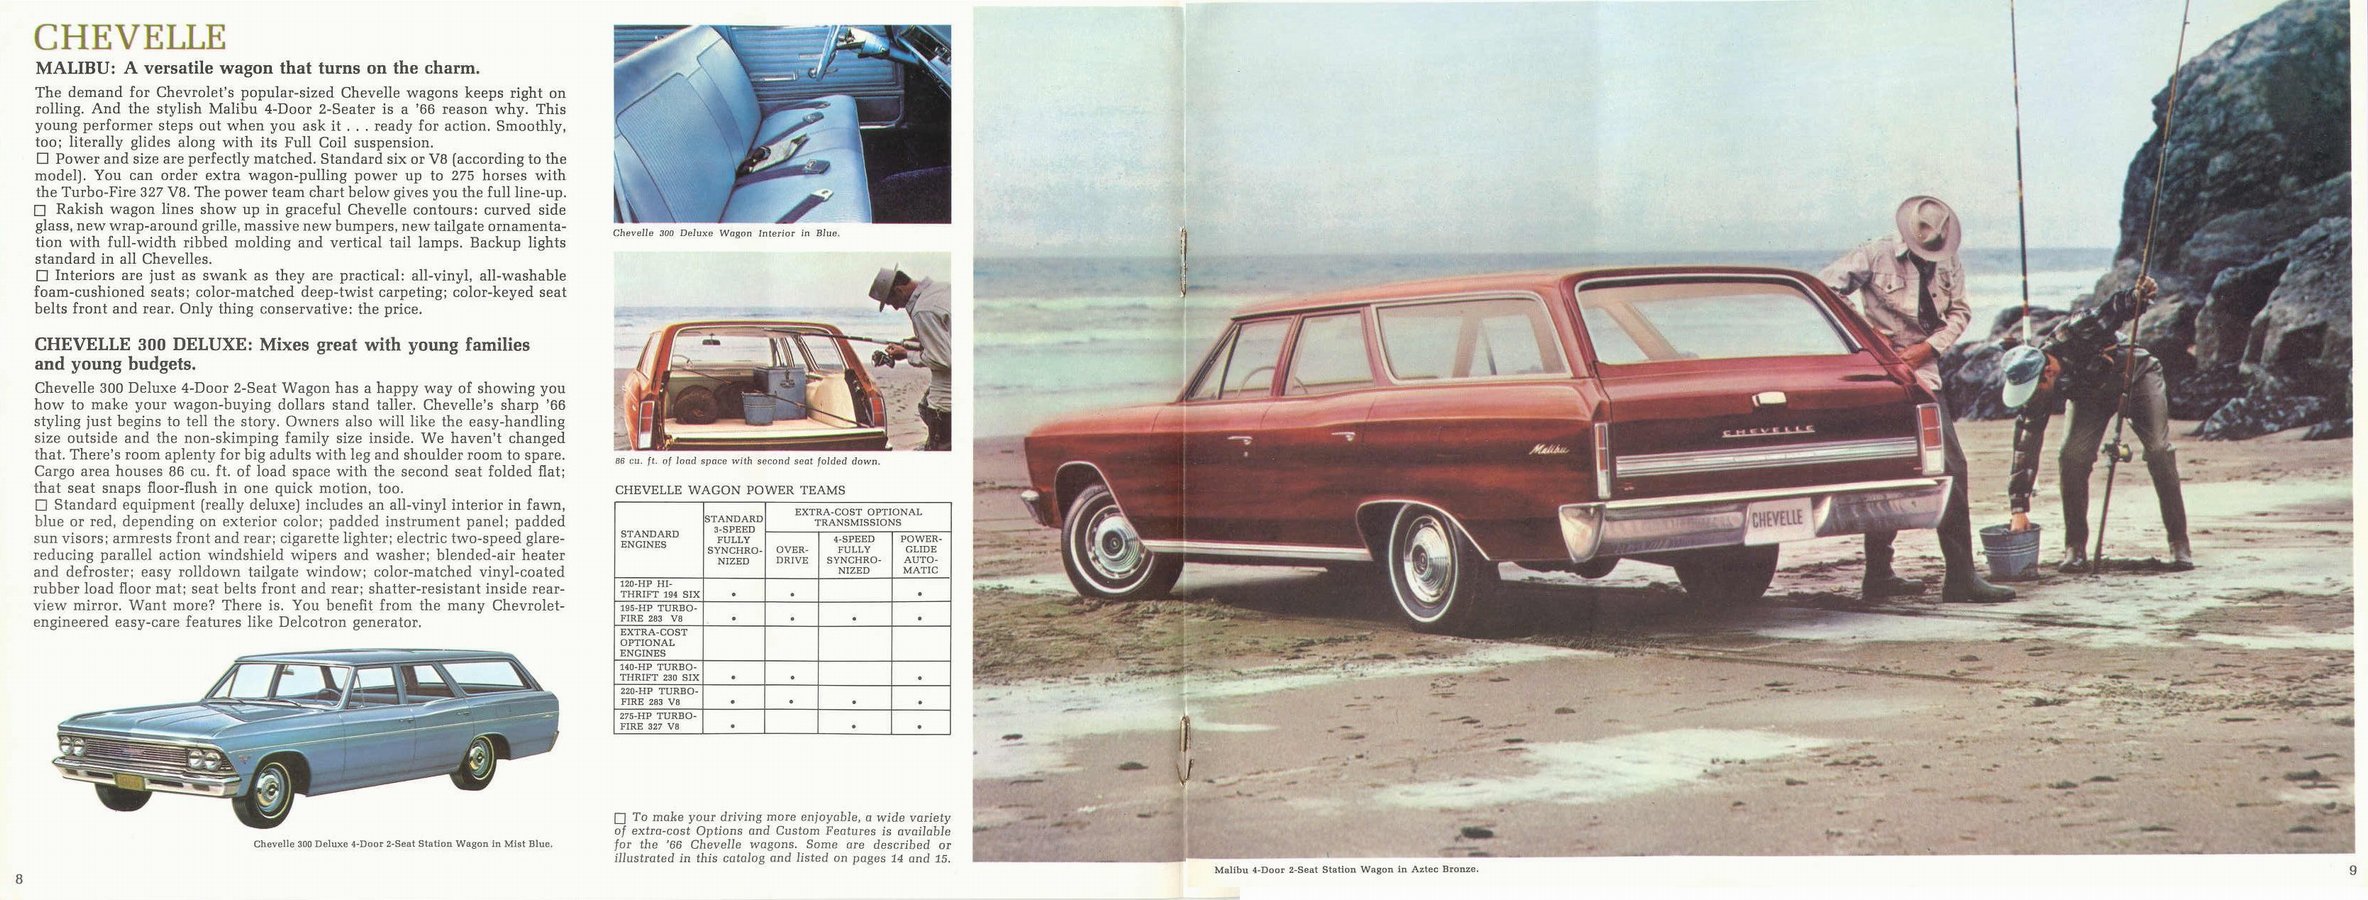 1966 Chevrolet Wagons-08-09